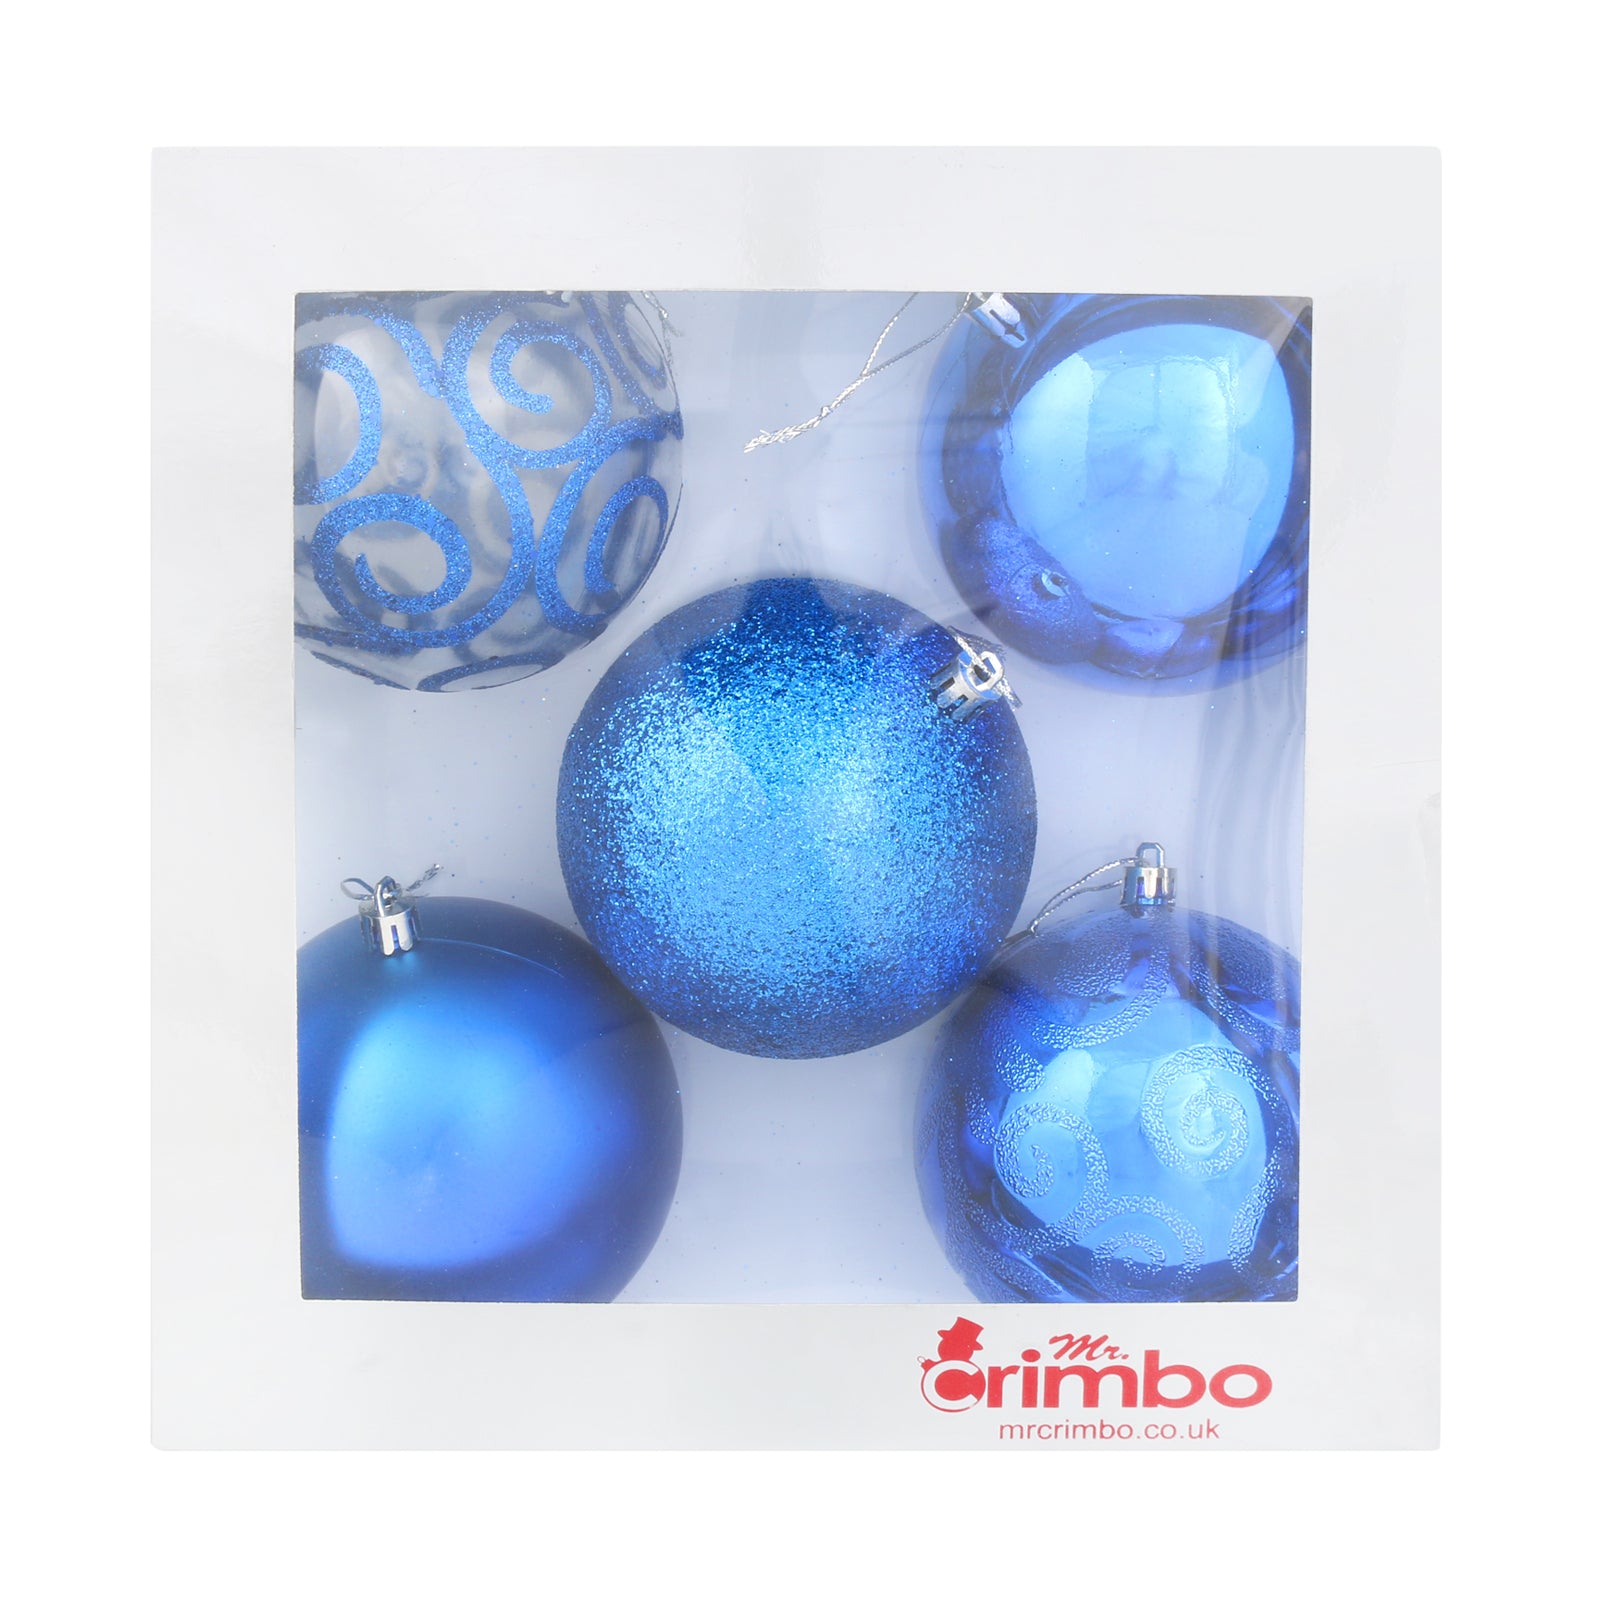 Mr Crimbo 5 x 10cm Christmas Tree Baubles Various Colours - MrCrimbo.co.uk -XS5687 - Blue -Baubles